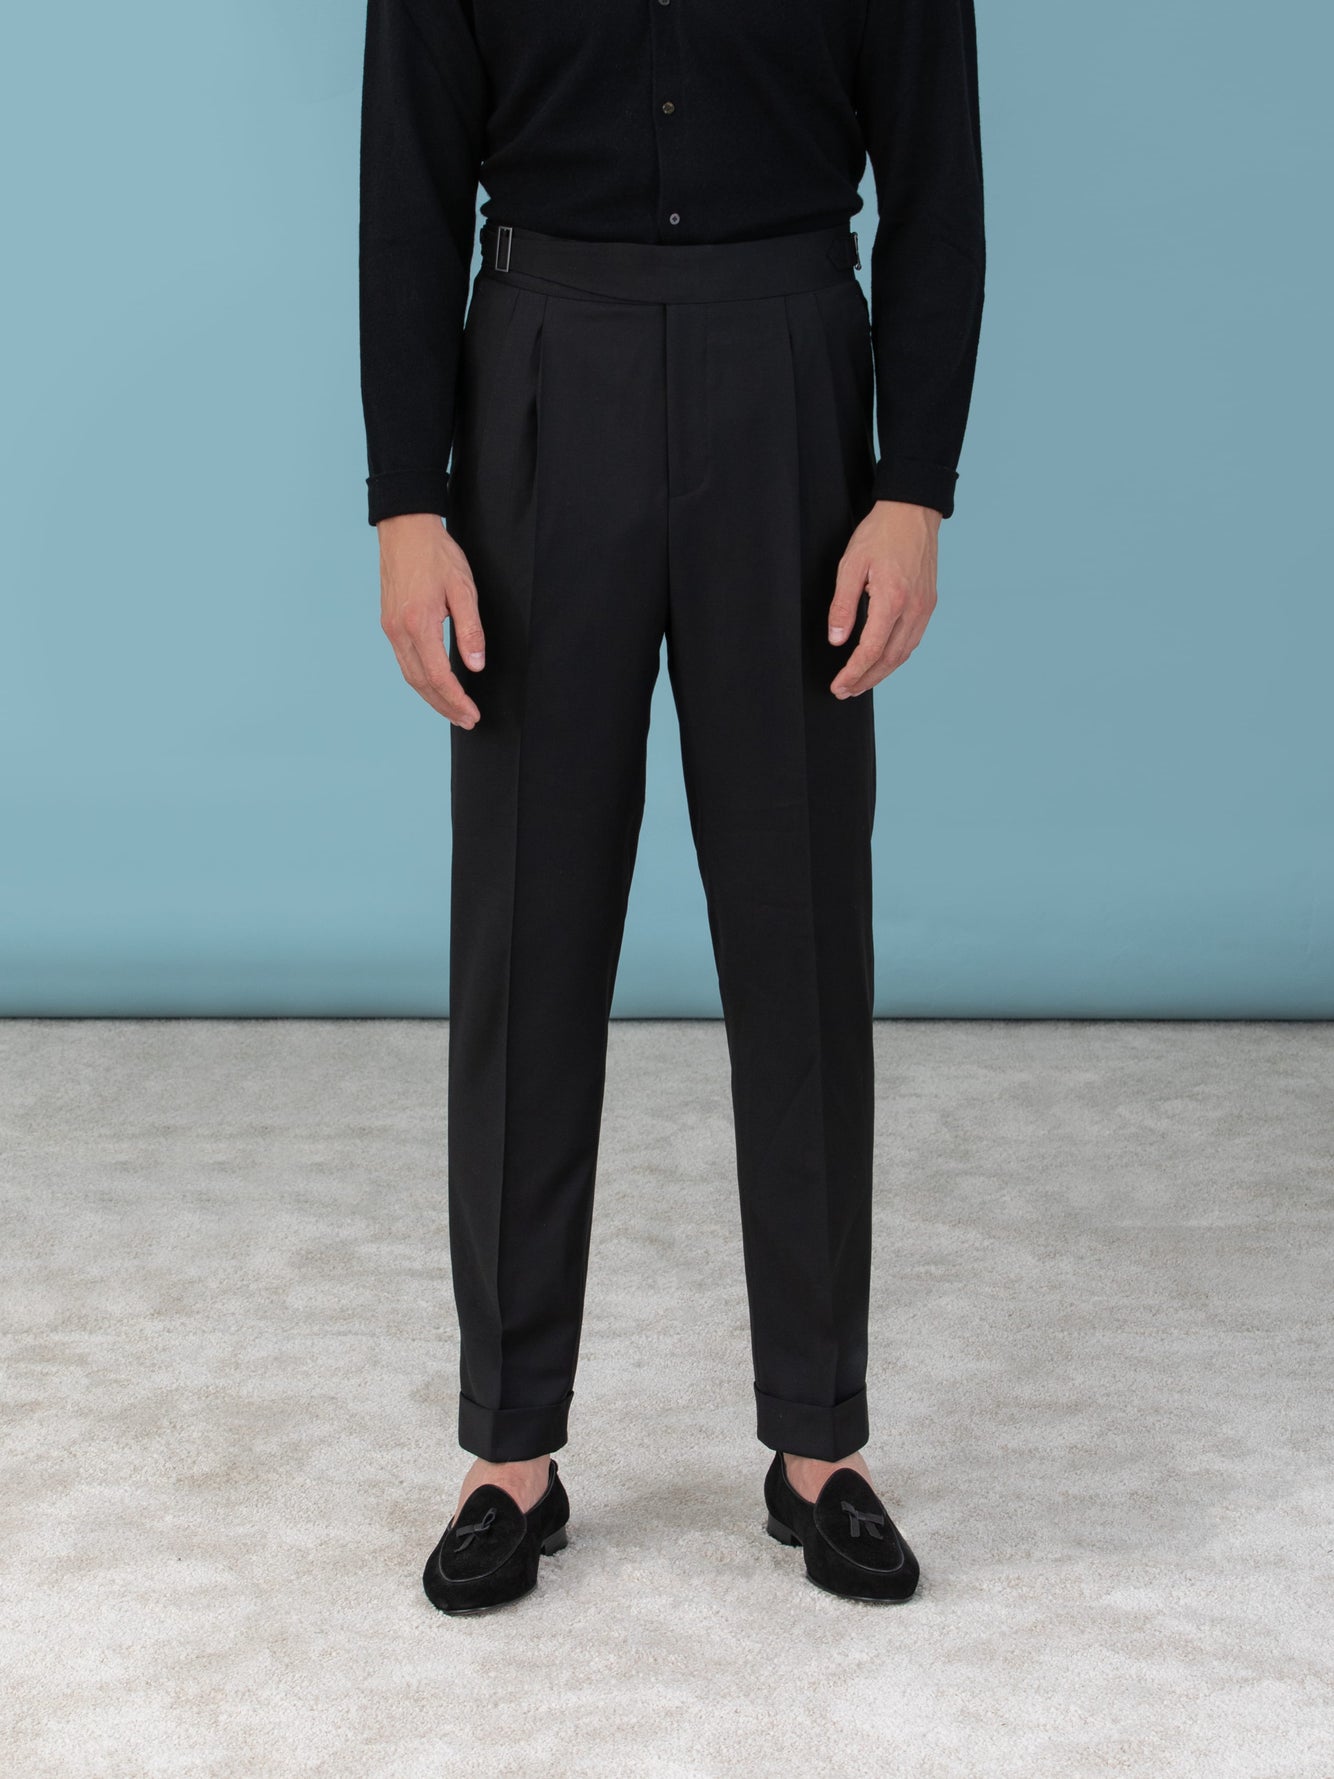 Grand Le Mar  Black Wool Gurkha Trousers Tailored Comfort for Dapper Style.